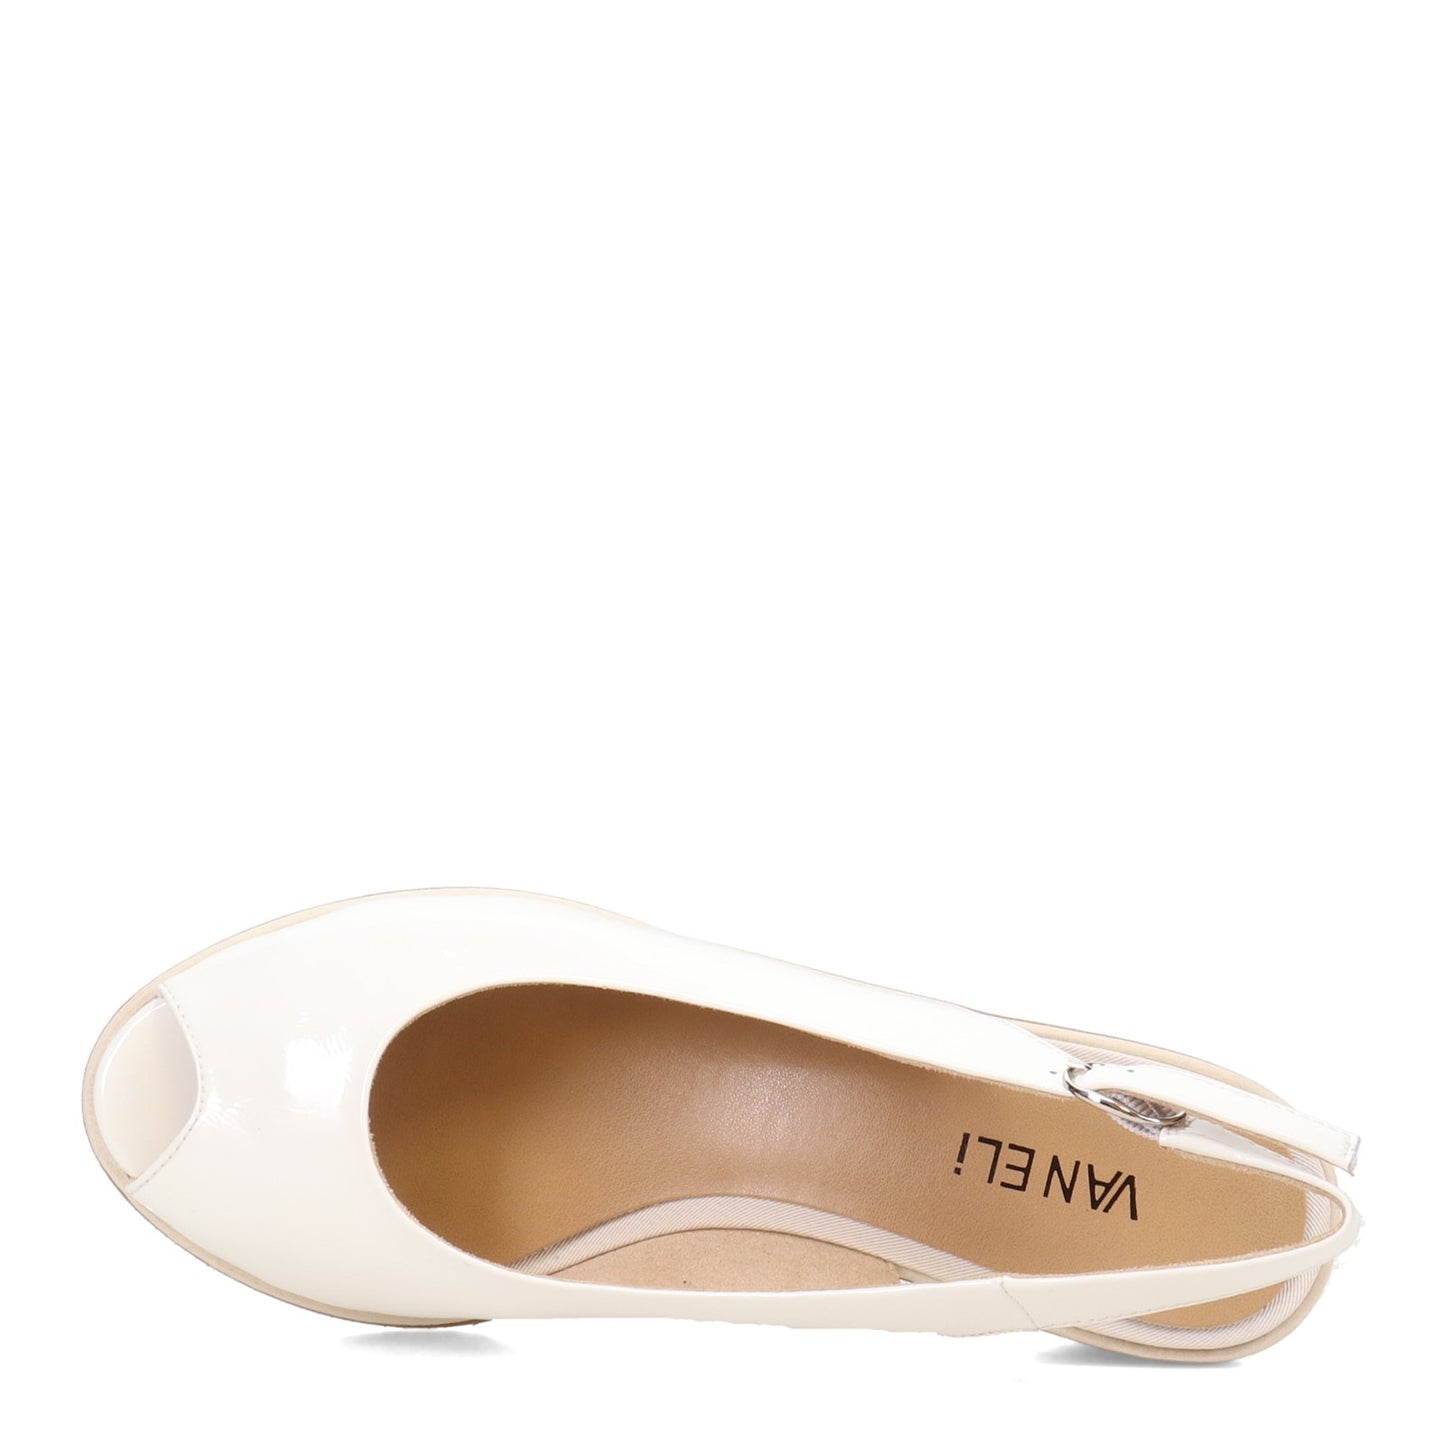 Peltz Shoes  Women's Vaneli Baise Sandal WHITE PATENT BAISE-WHITE PAT